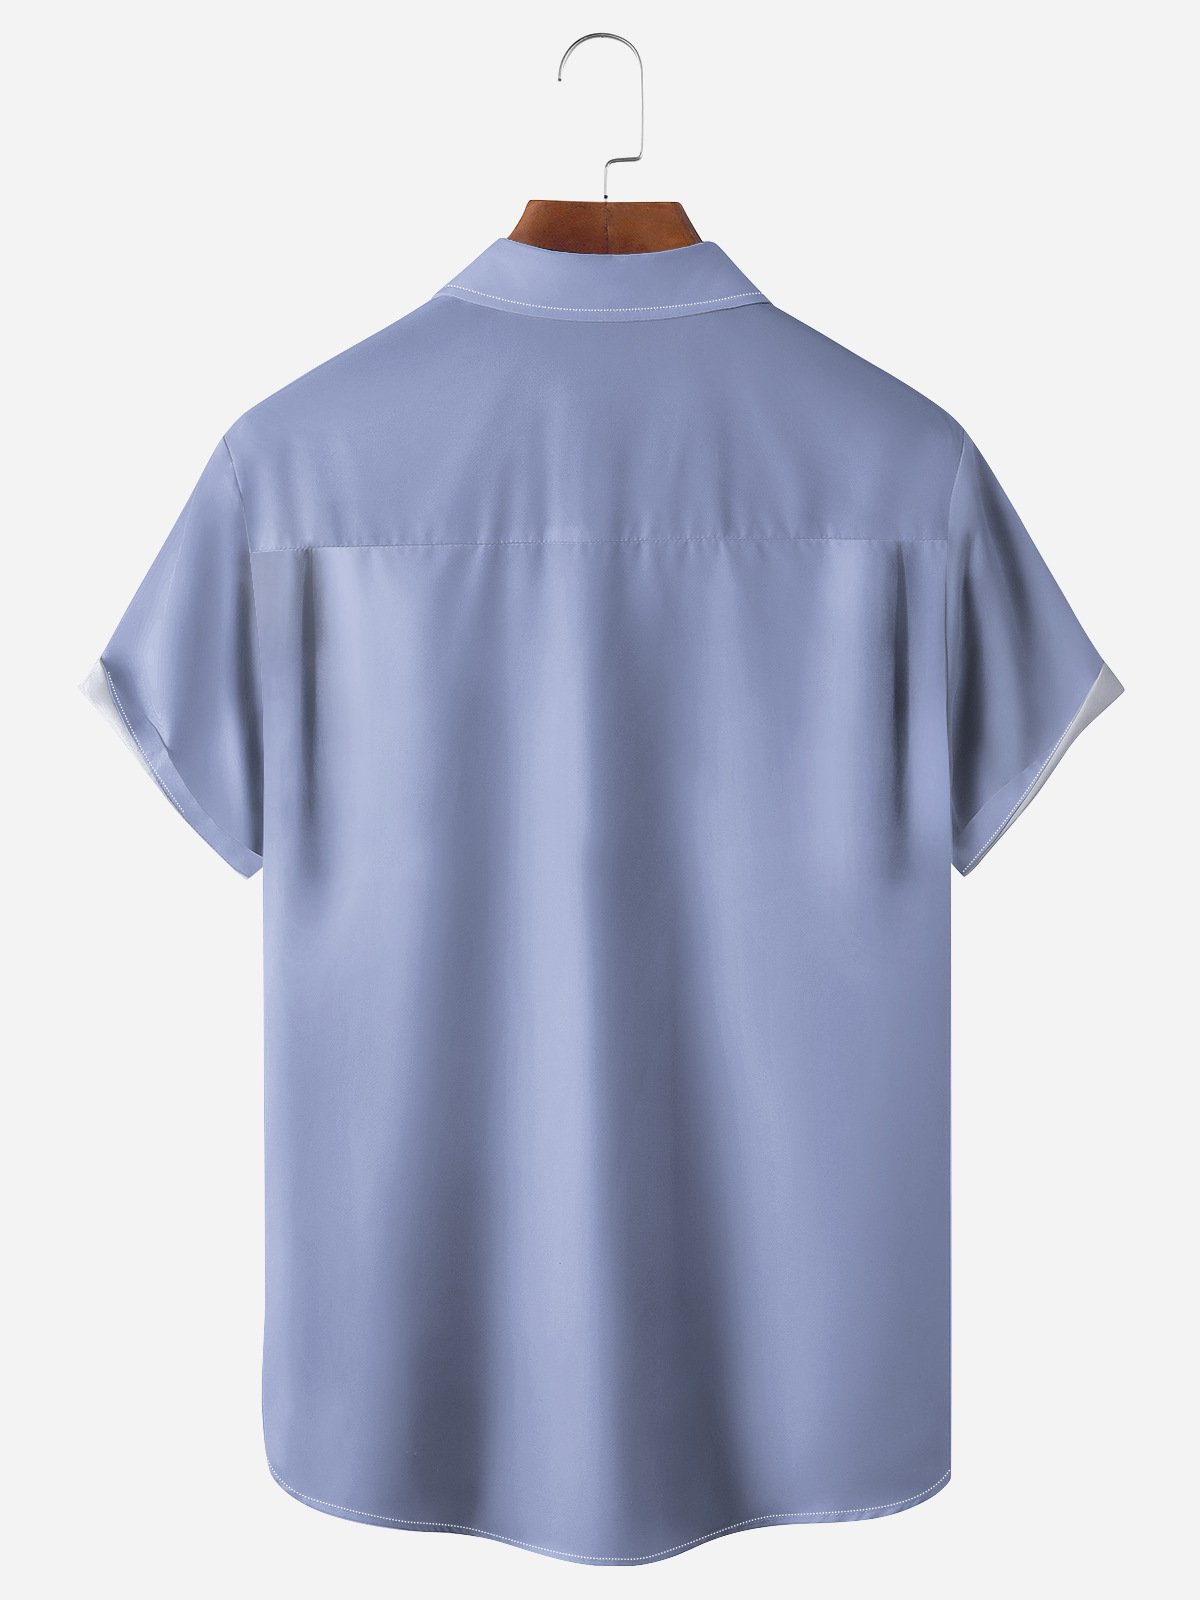 Palm Tree Chest Pocket Short Sleeve Bowling Shirt